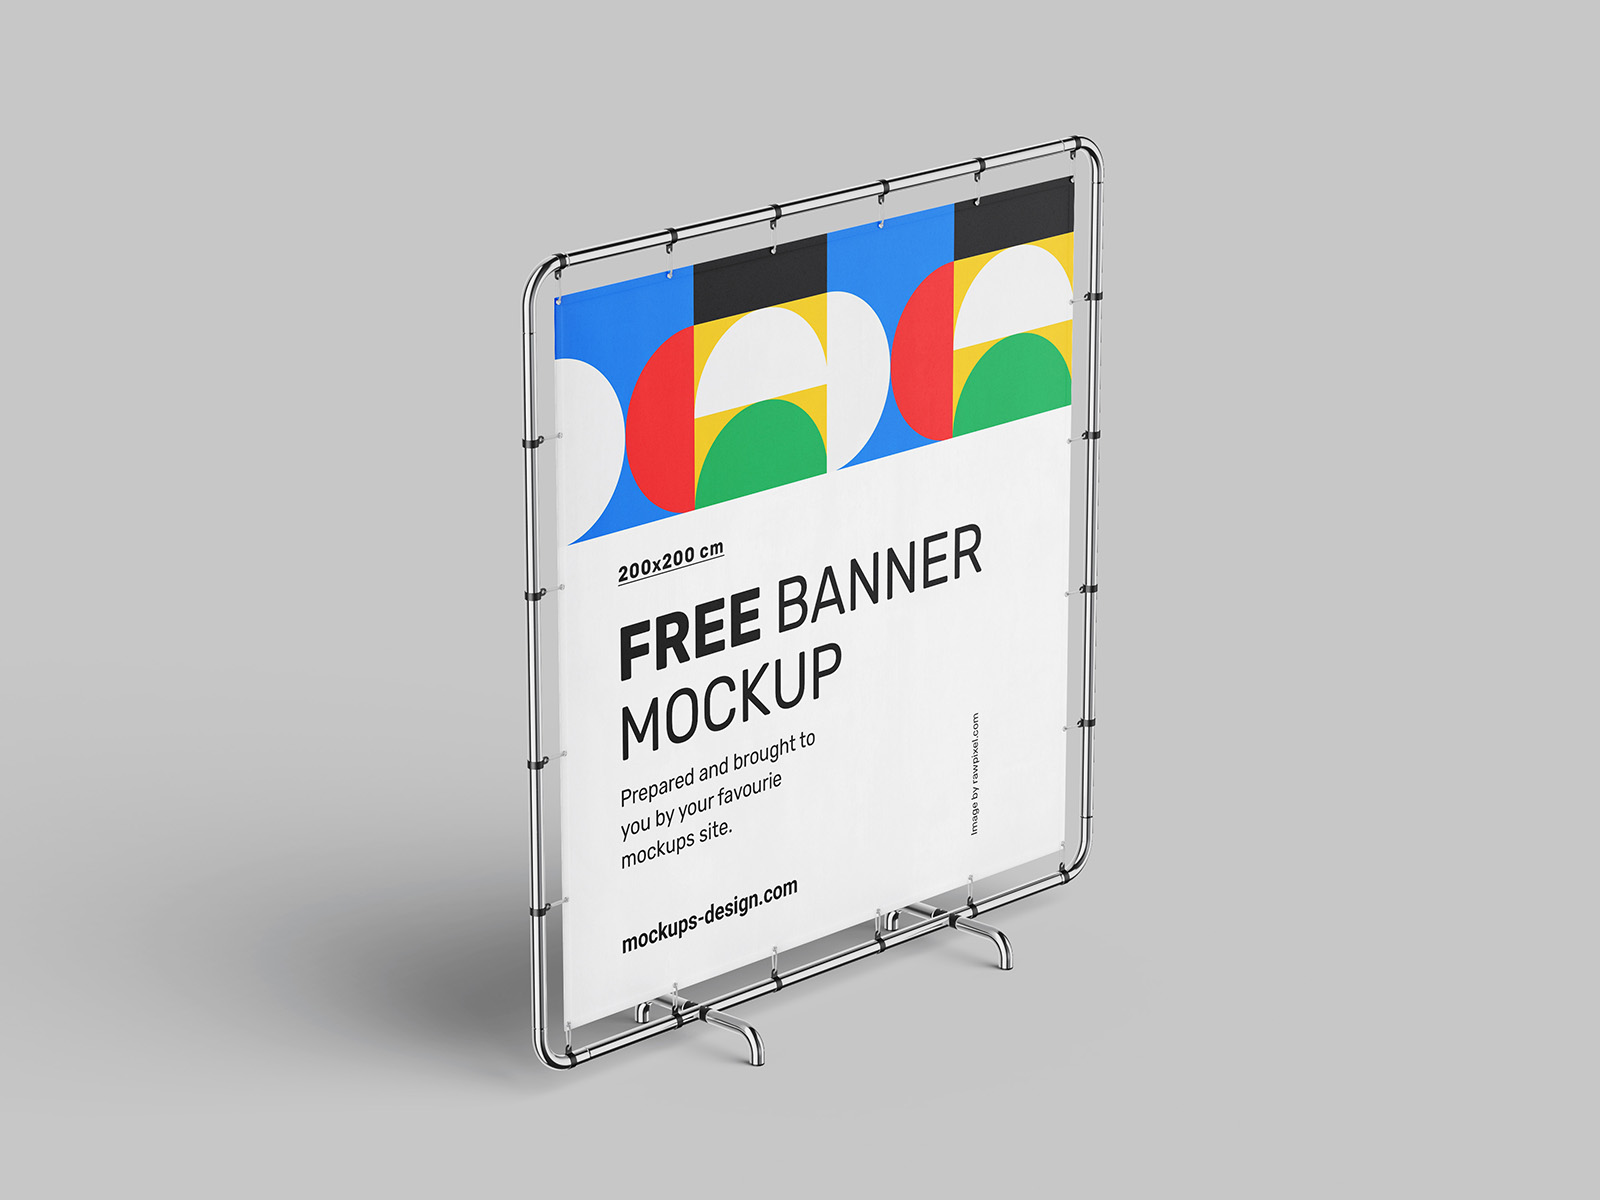 Free baner mockup / 200 x 200 cm